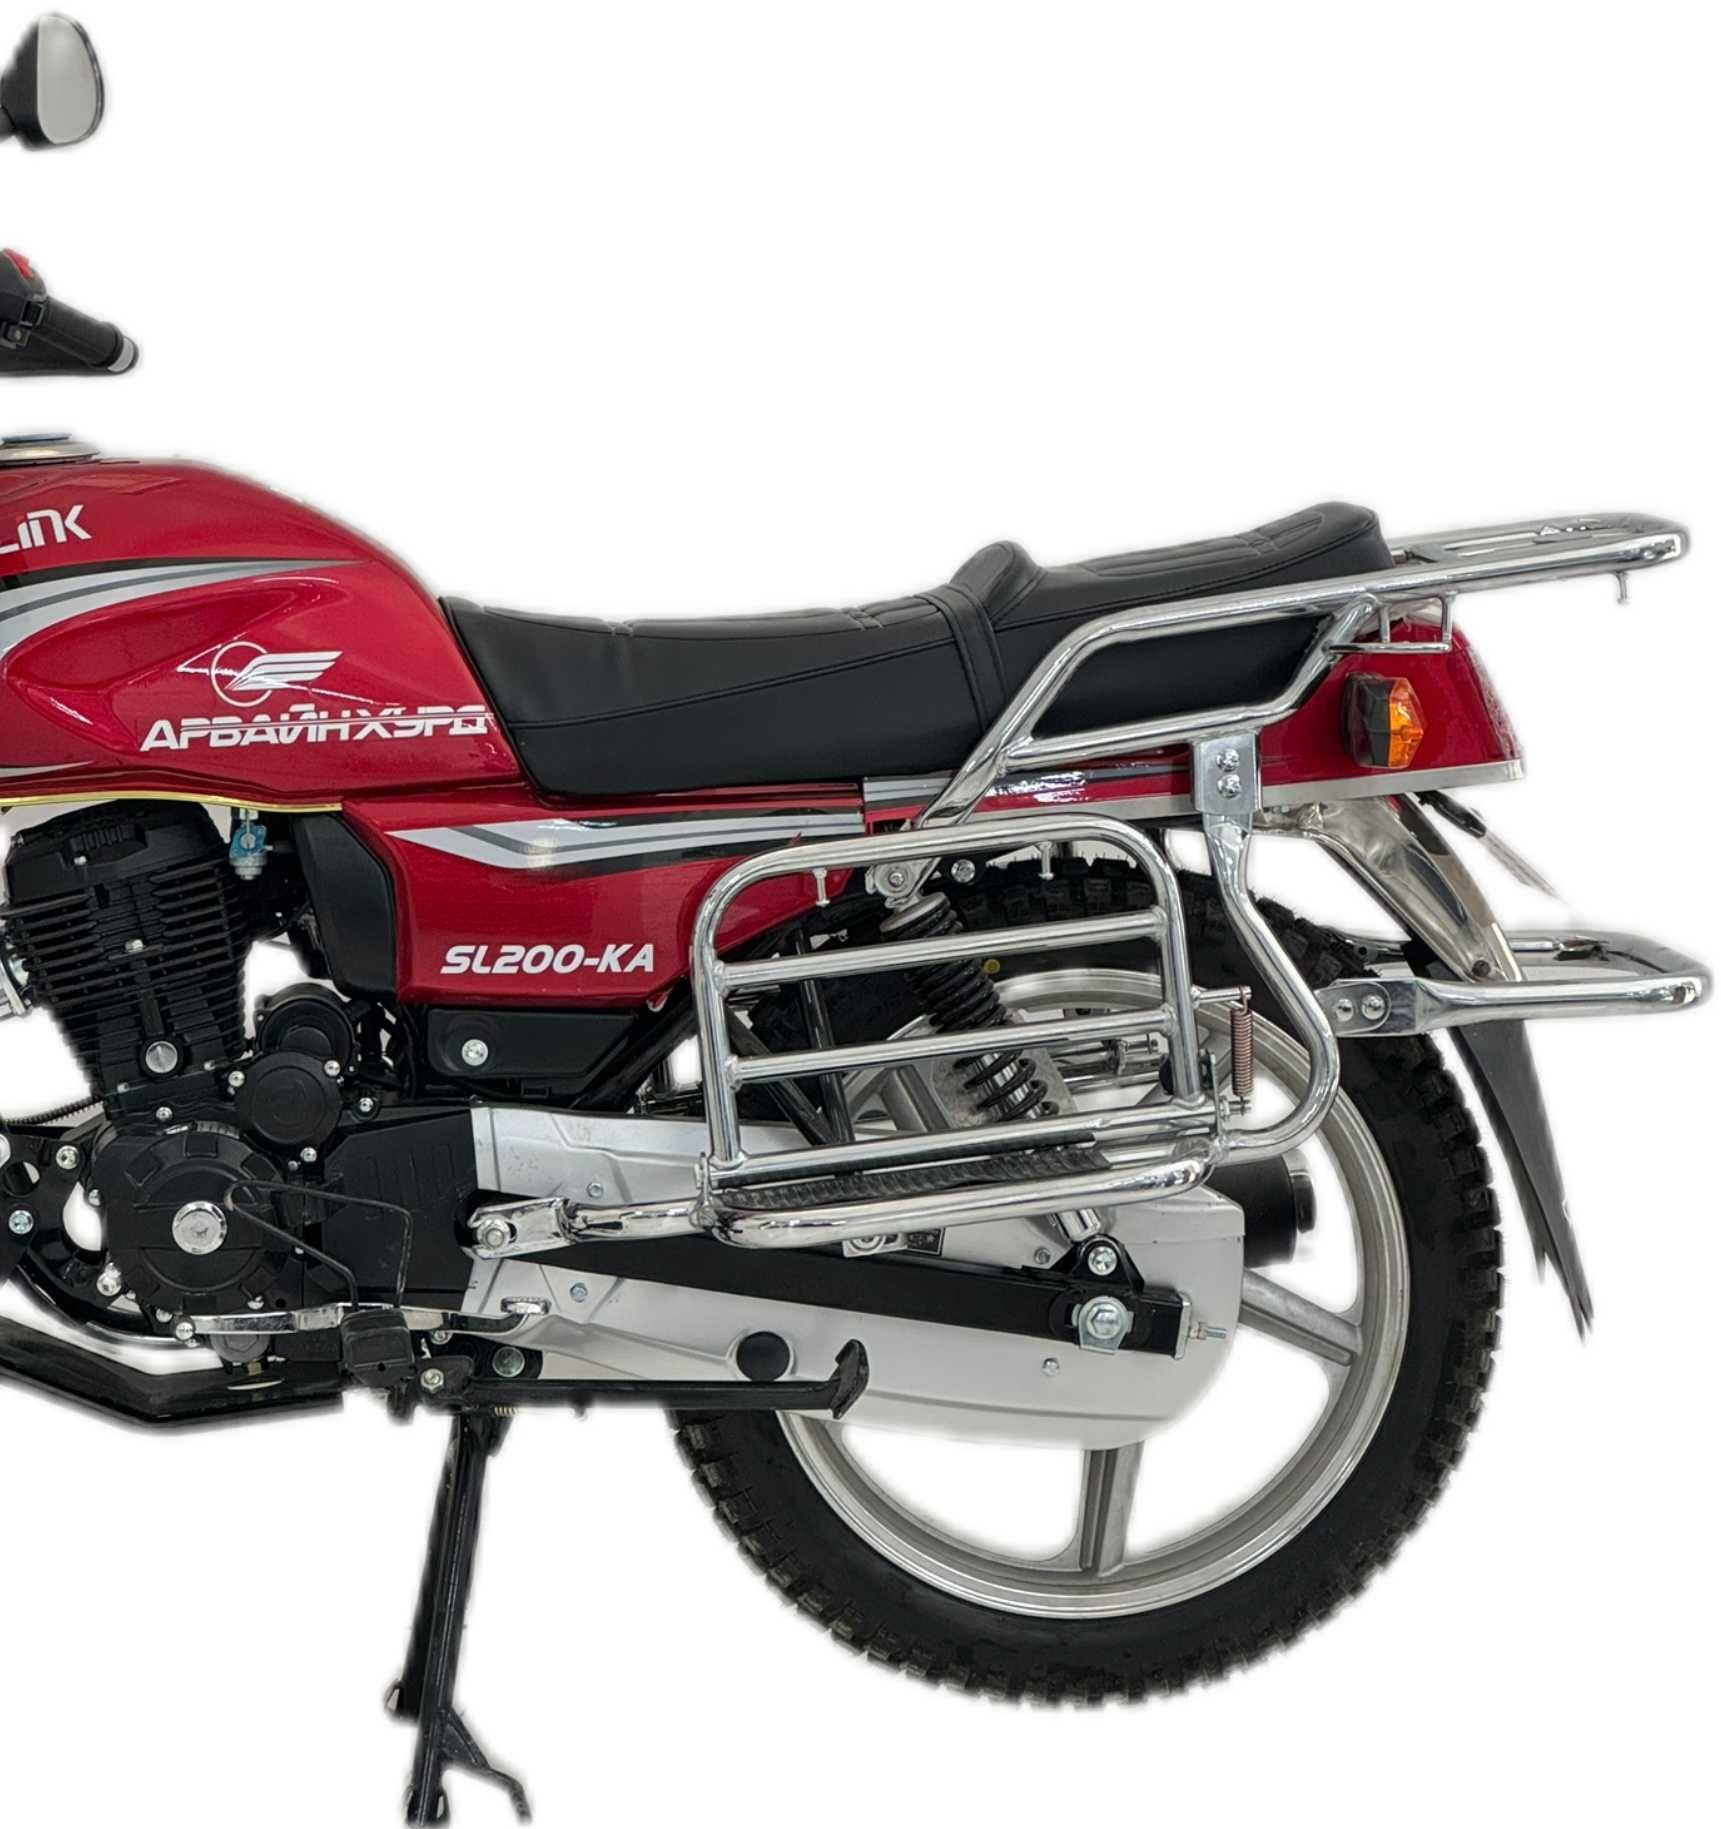 Сонлинк Мотоцикл 200 кубтық оригинал; Оригинал мотоцикл Sonlink 200CC